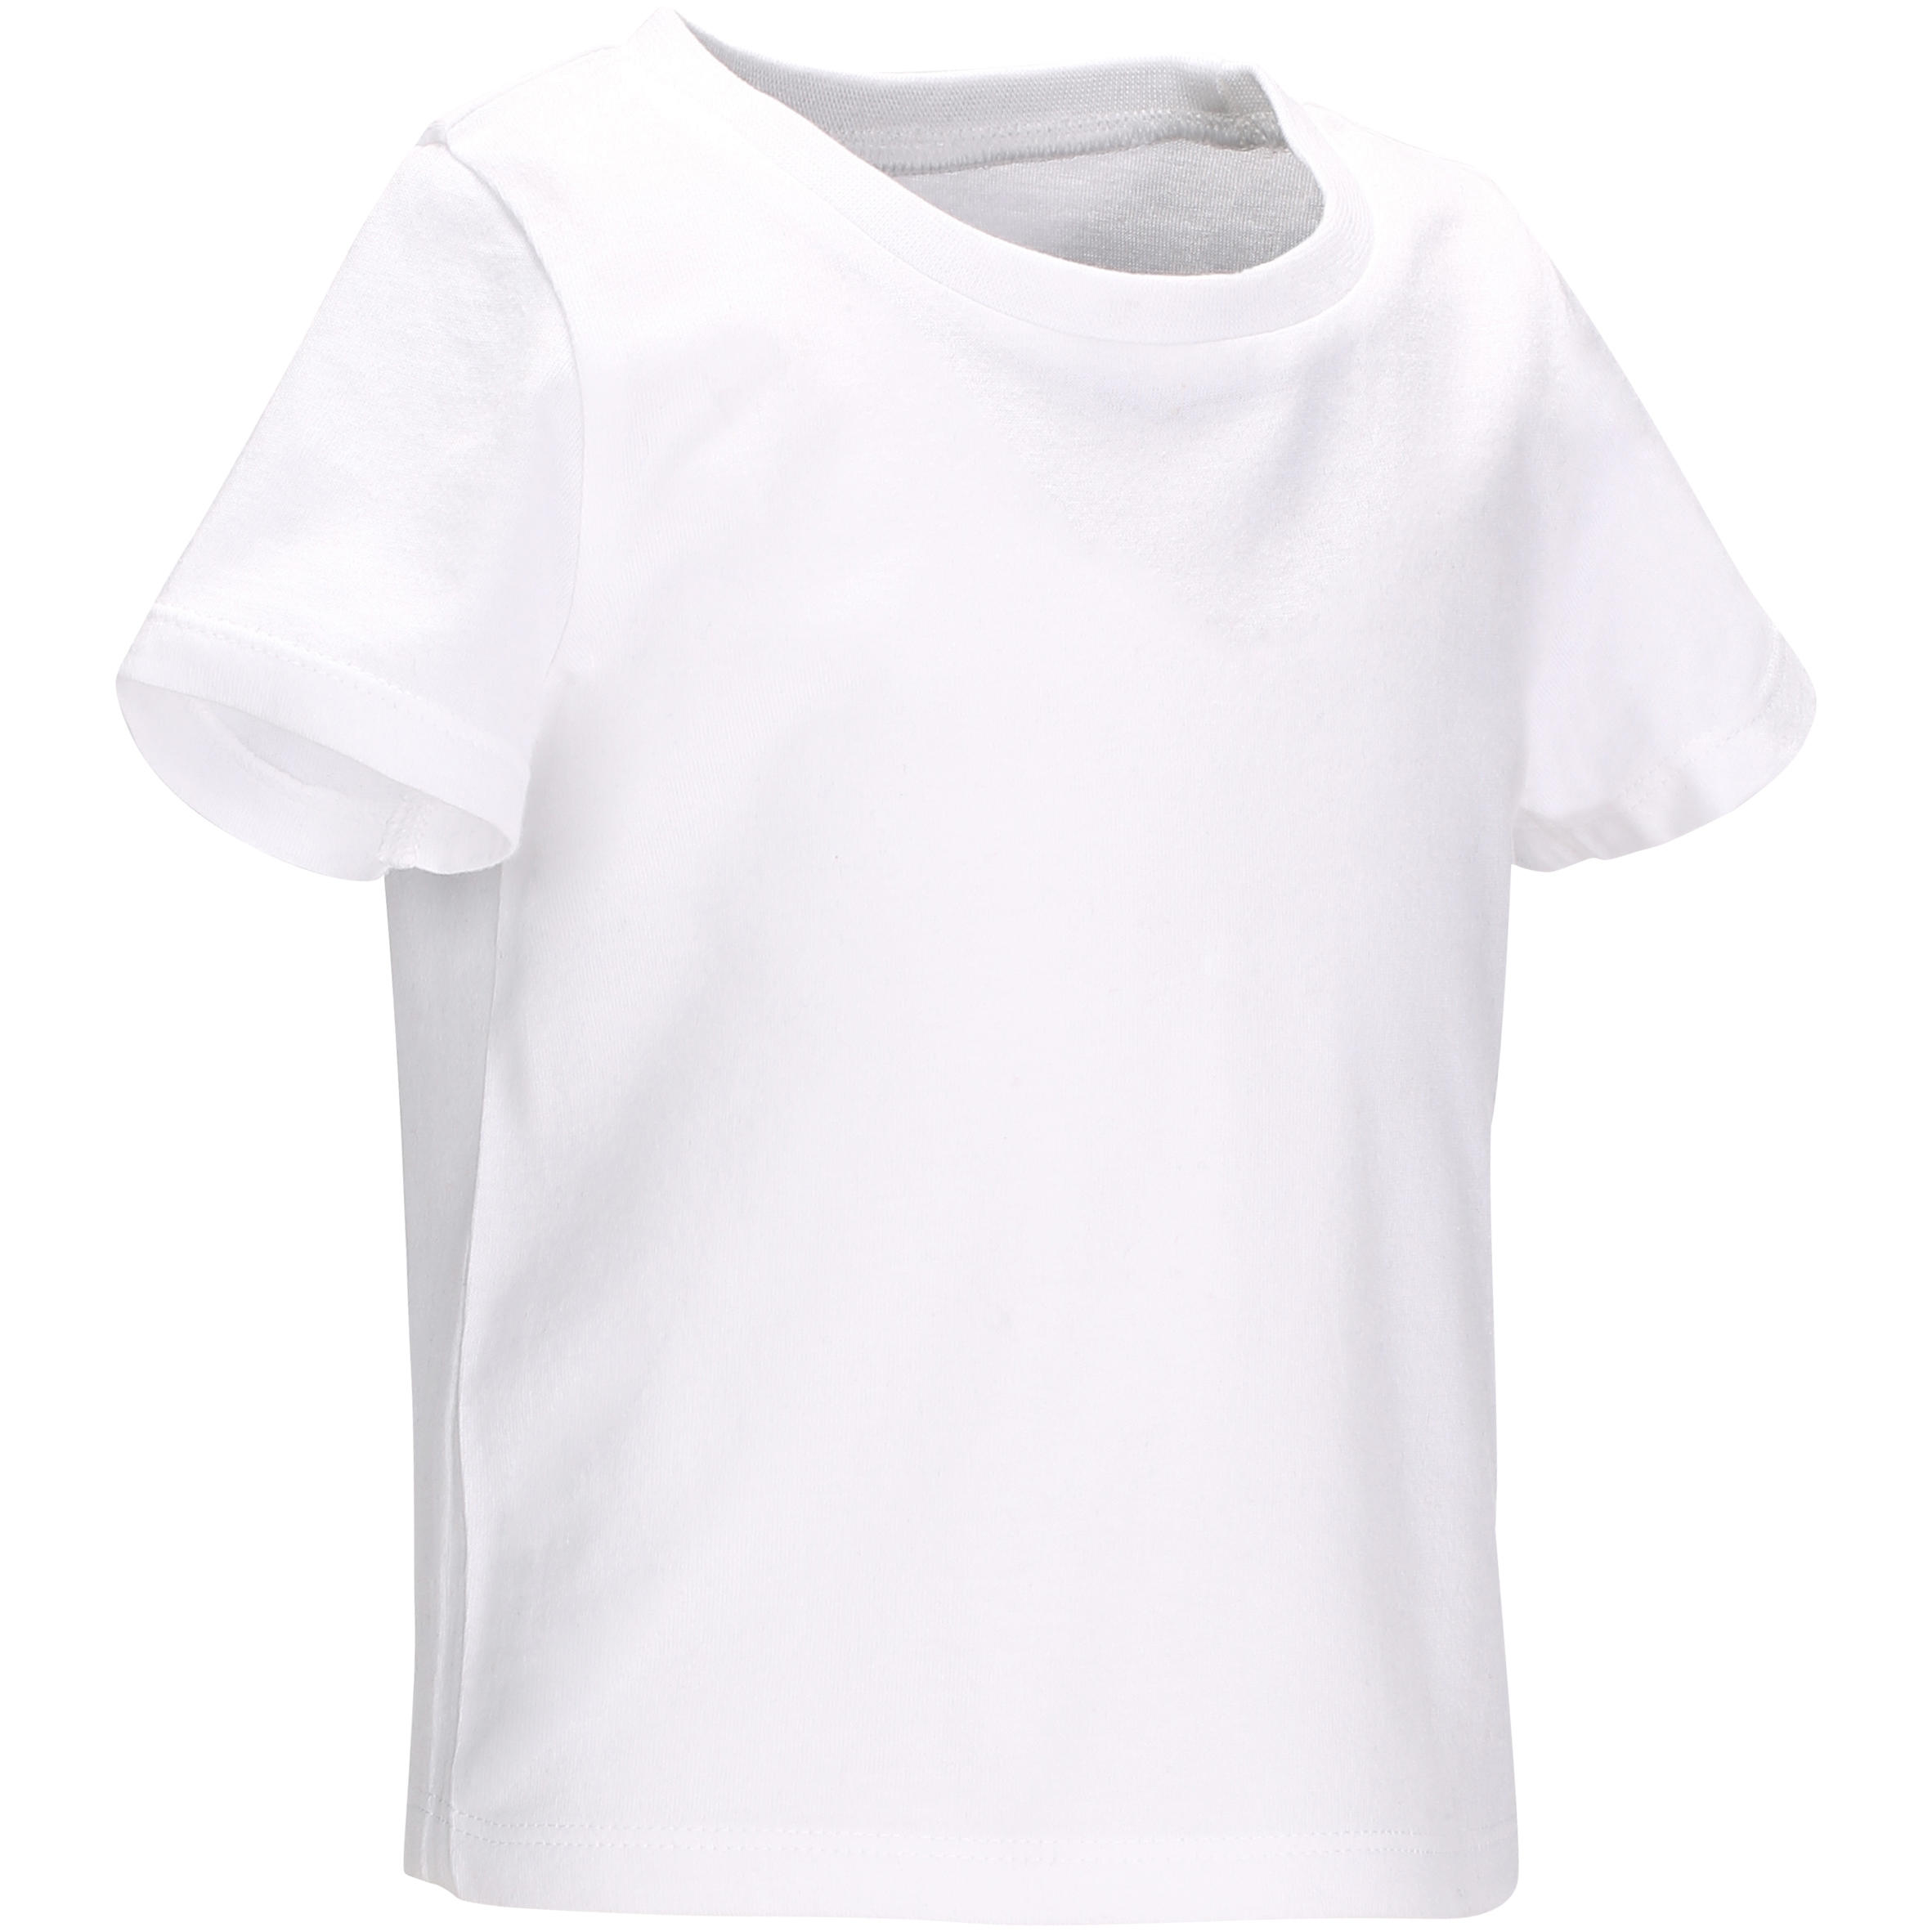 Buy T Shirt Online At Decathlon.In